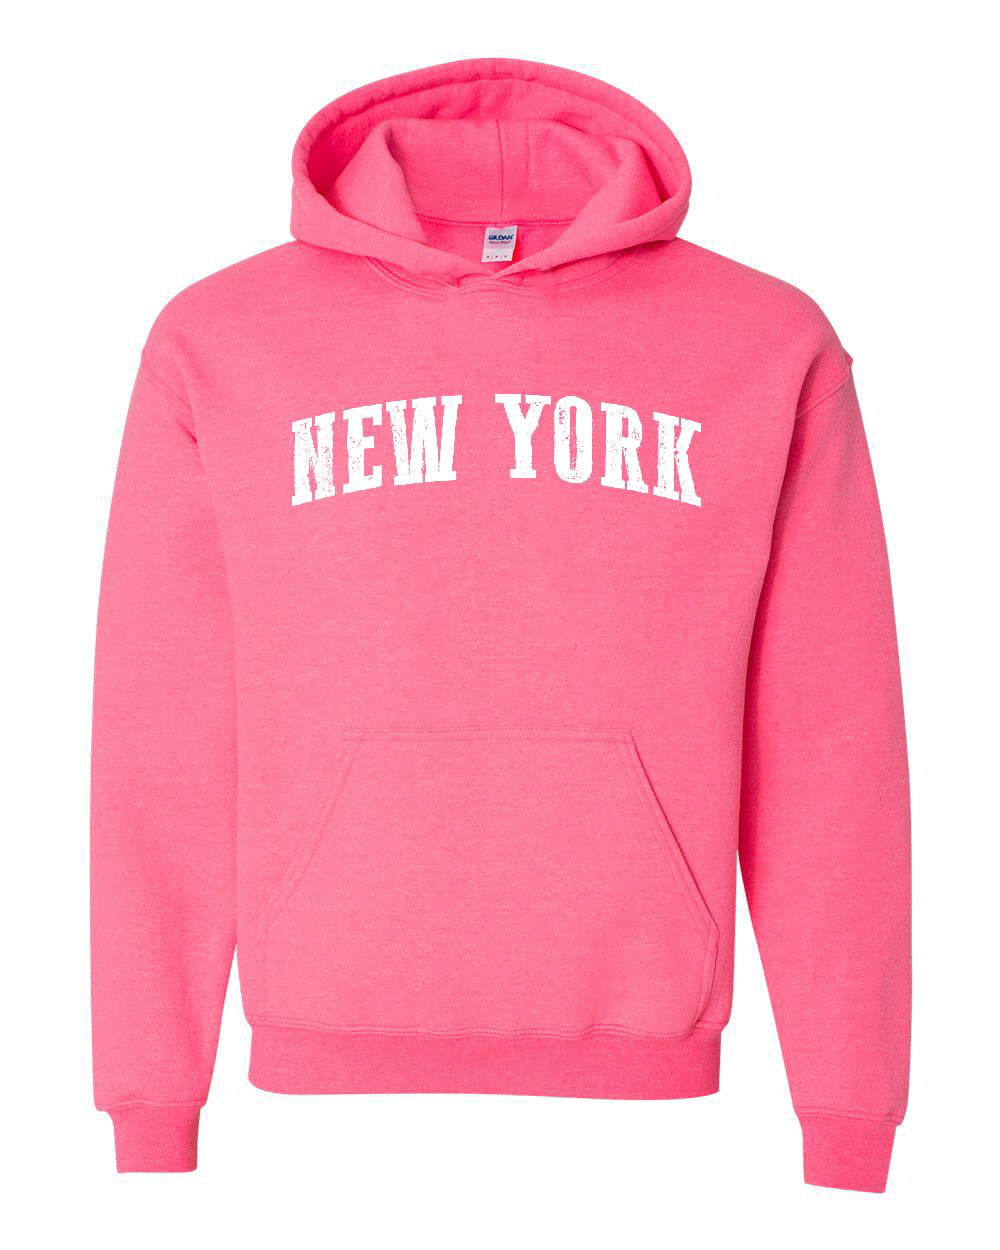 Unisex New York City Hoodie Sweatshirt - Walmart.com